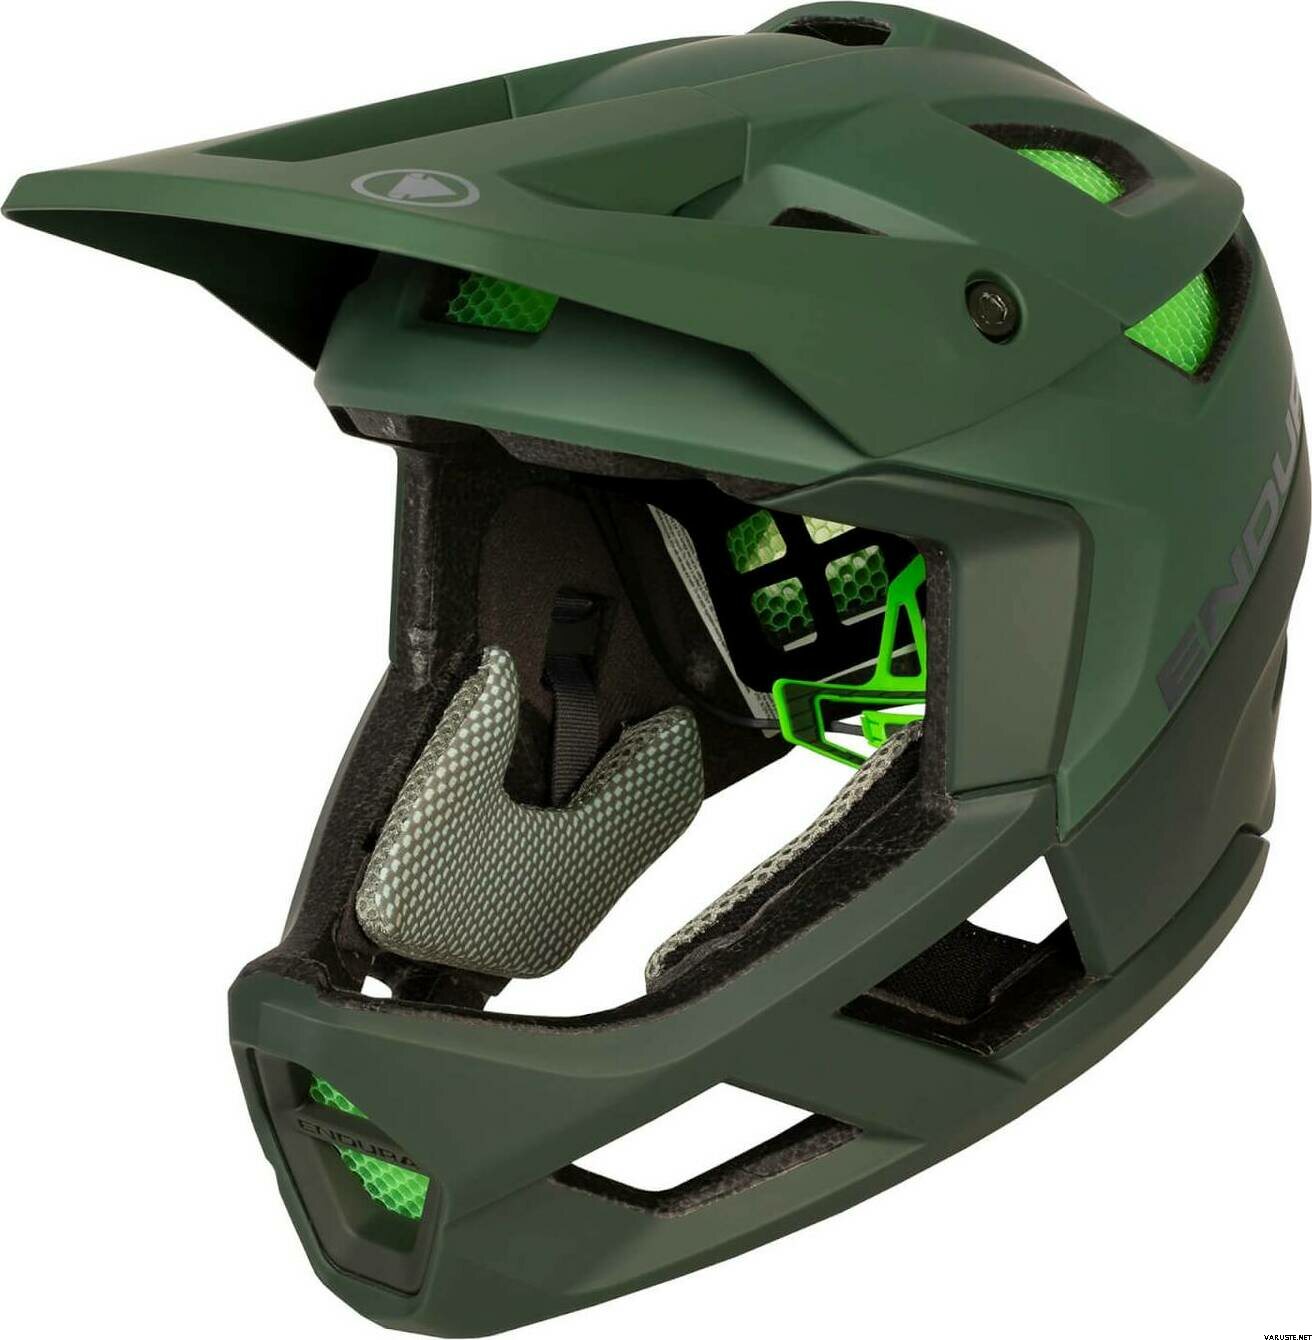 Endura MT500 Full face MIPS Helmet | Bike helmets | Varuste.net English